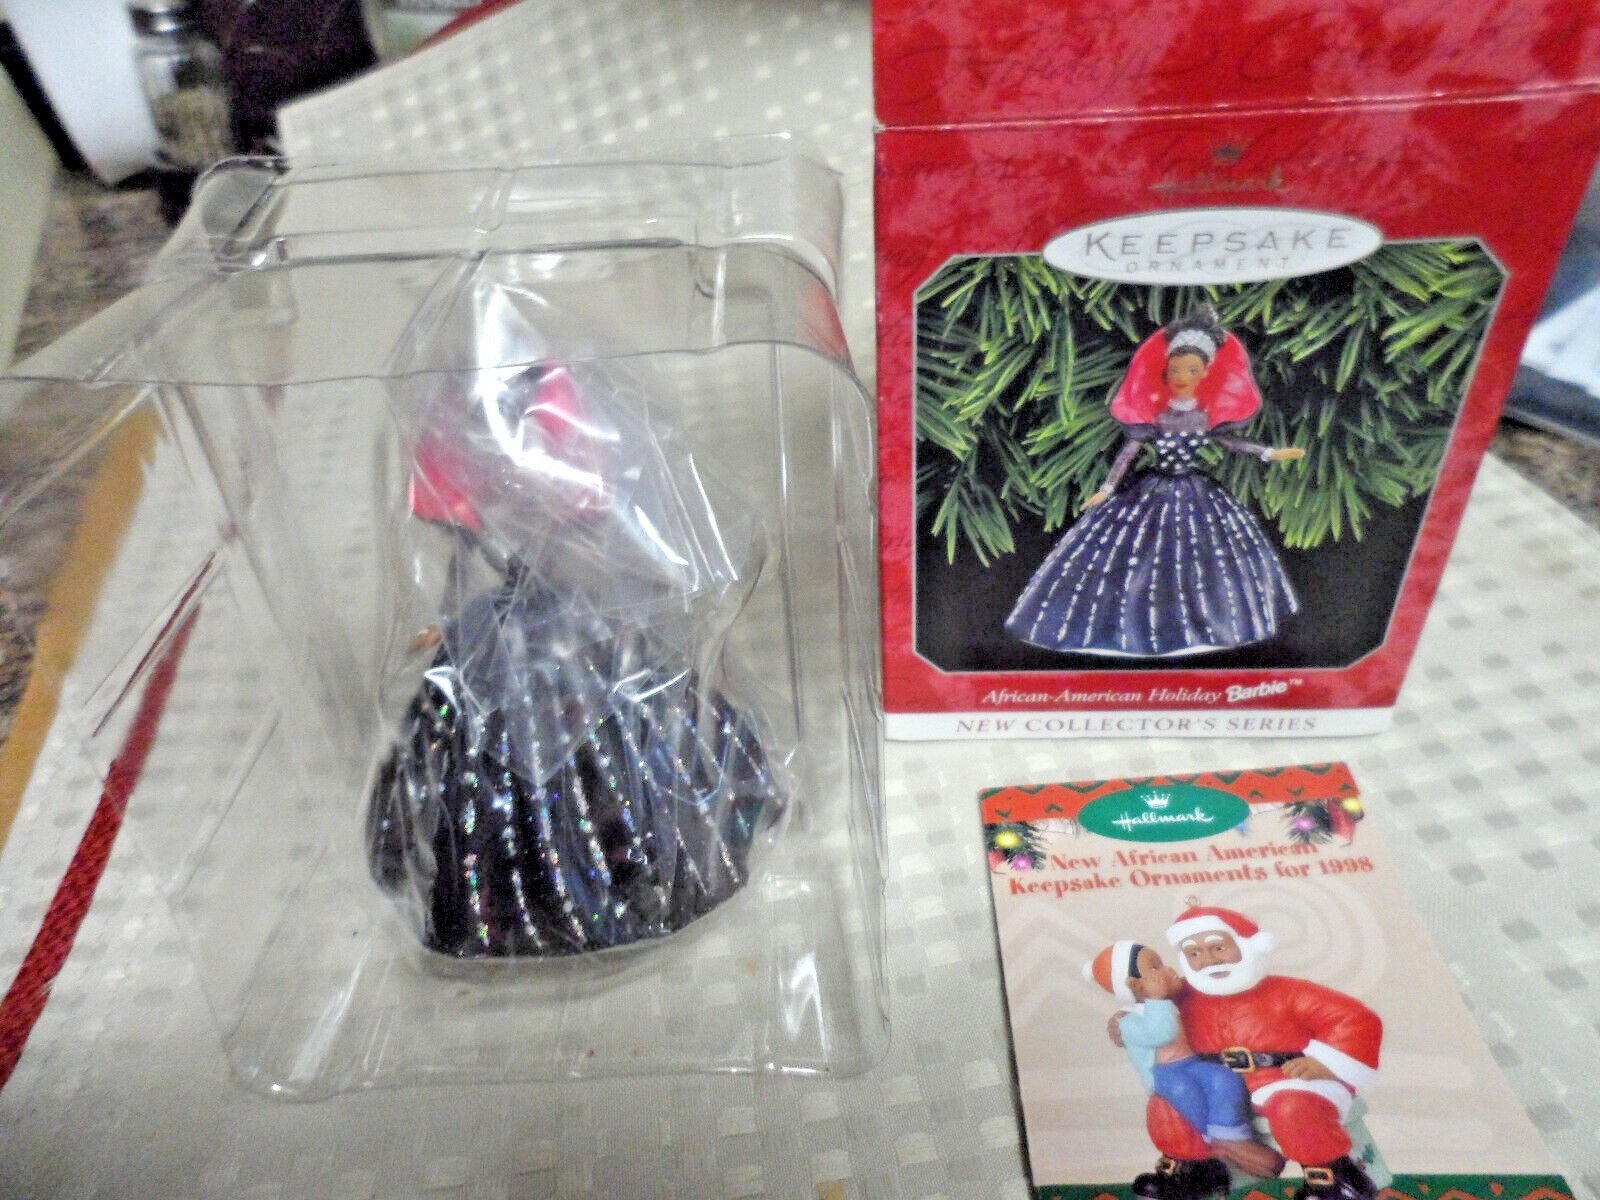 NewHallmark Keepsake African- American Holiday Barbie Ornament Series Dated 1998